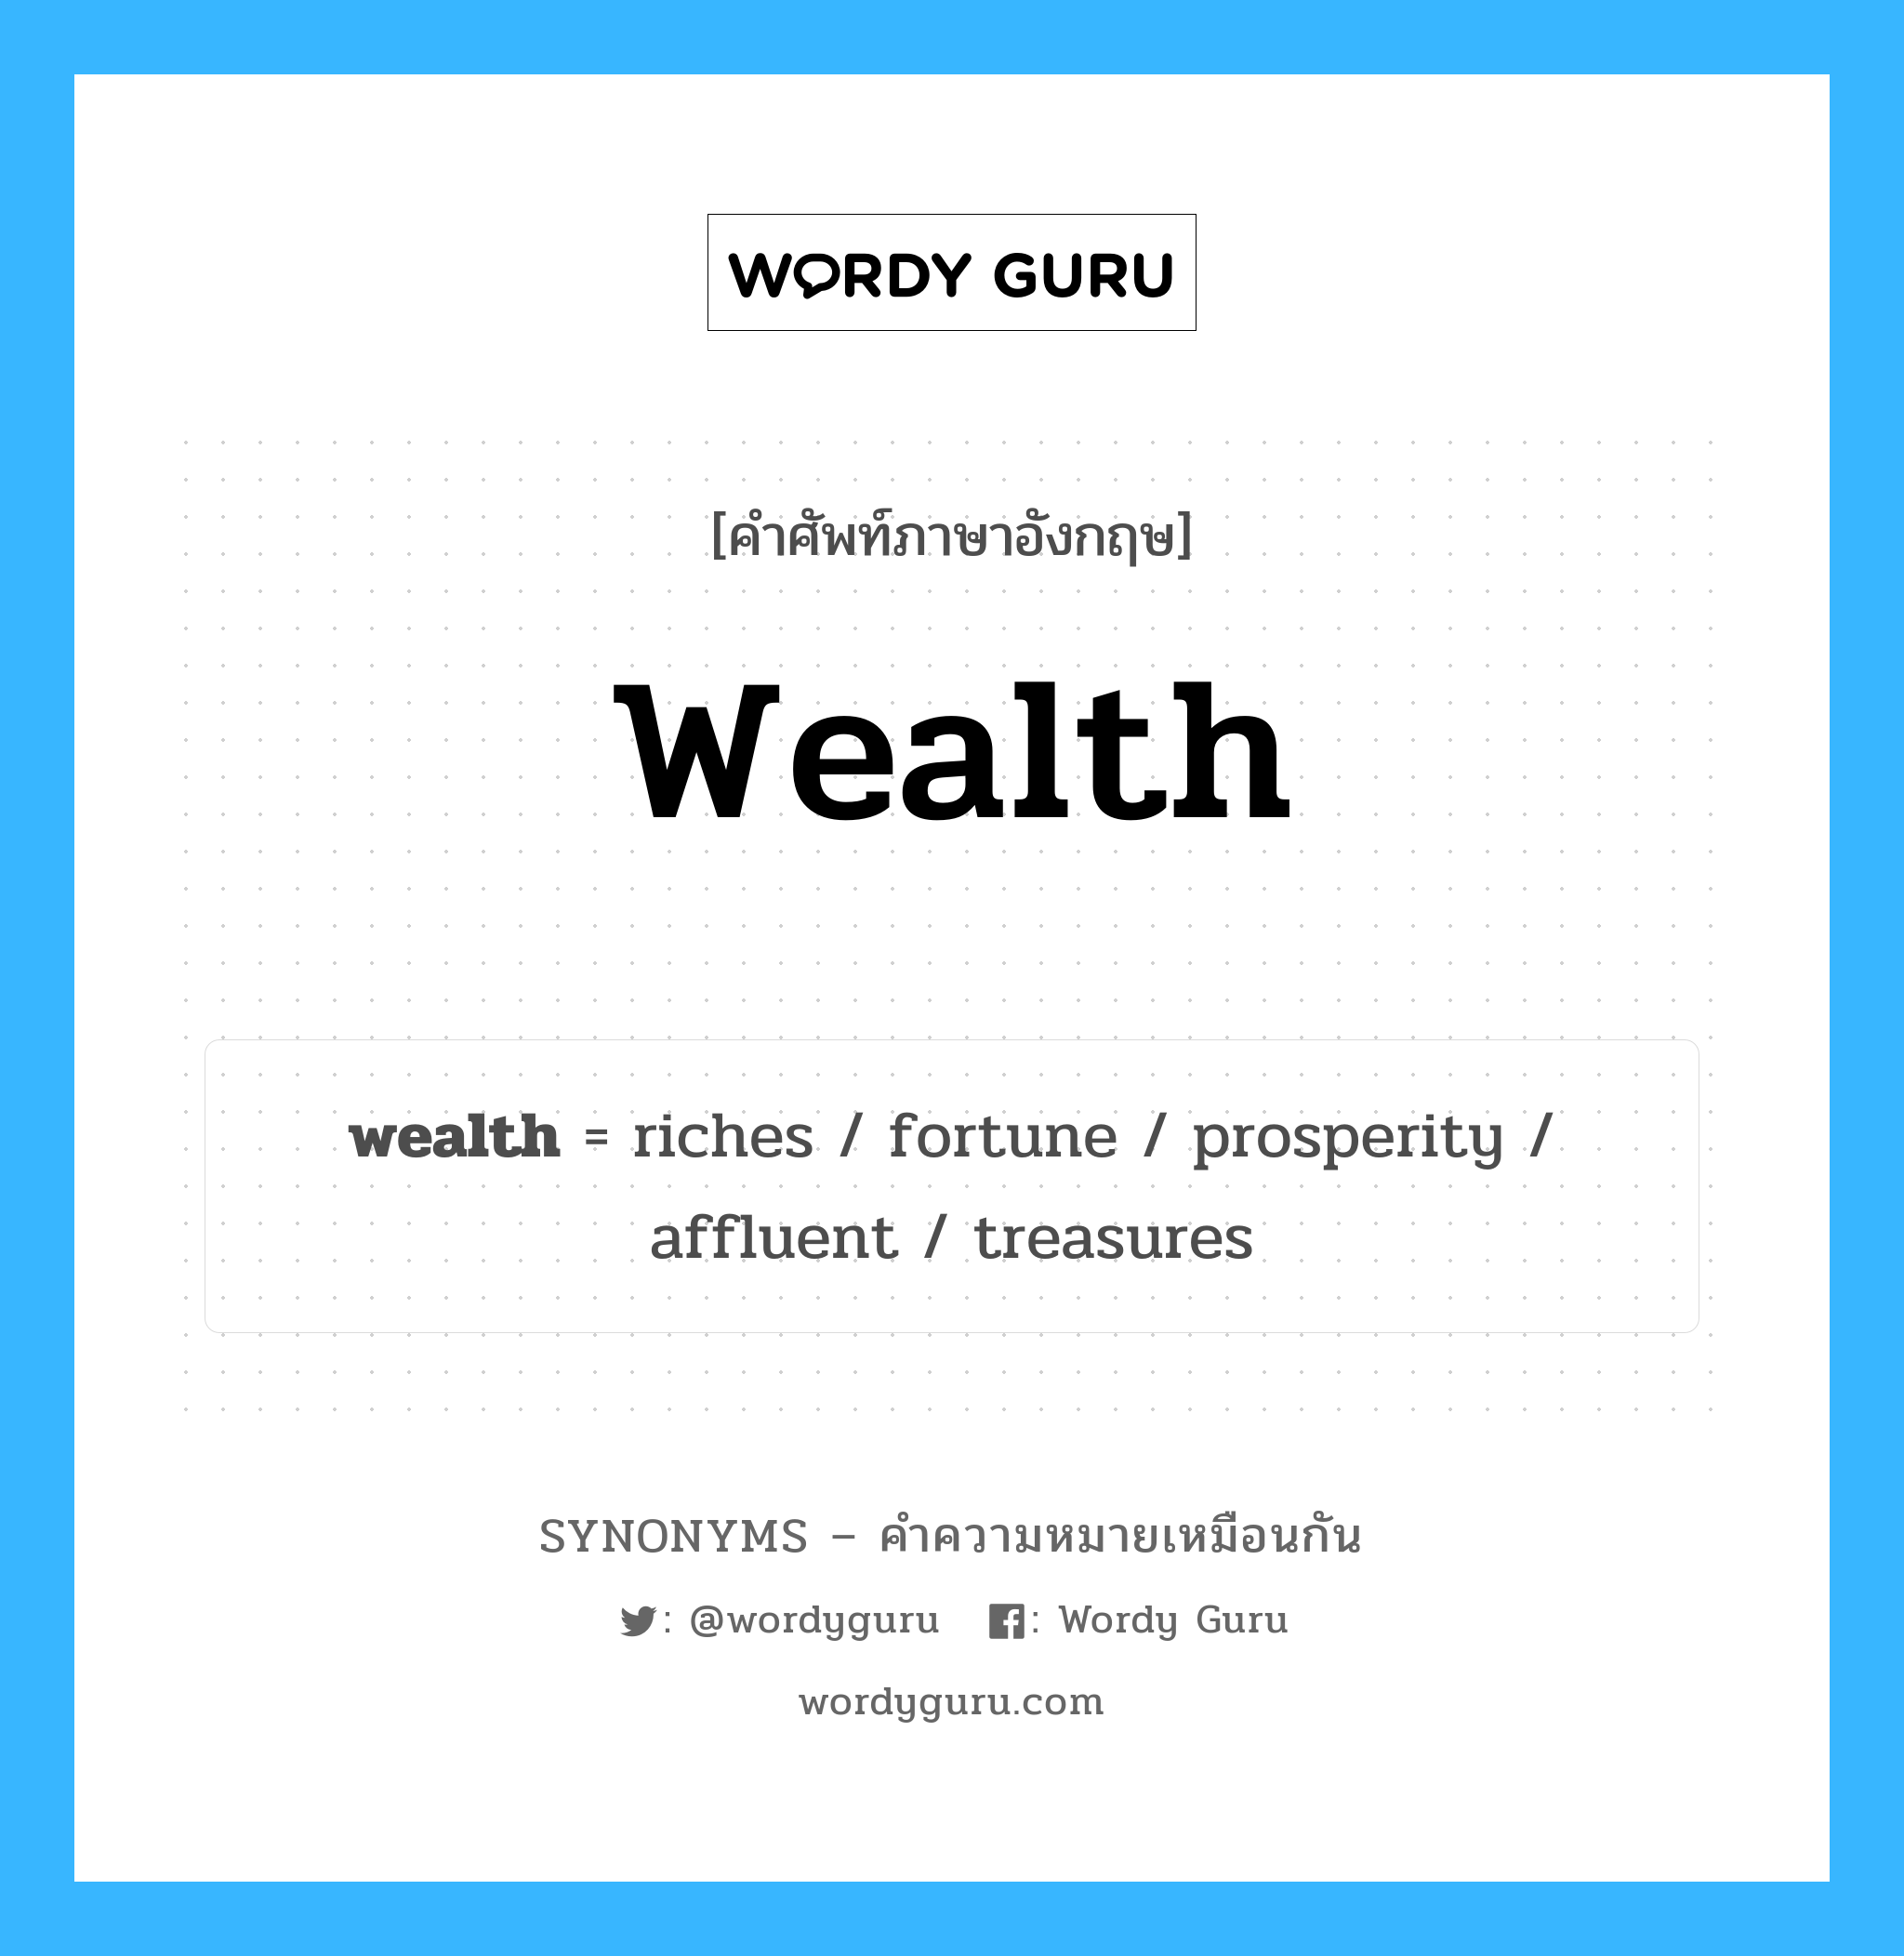 wealth เป็นหนึ่งใน fortune และมีคำอื่น ๆ อีกดังนี้, คำศัพท์ภาษาอังกฤษ wealth ความหมายคล้ายกันกับ fortune แปลว่า ฟอร์จูน หมวด fortune